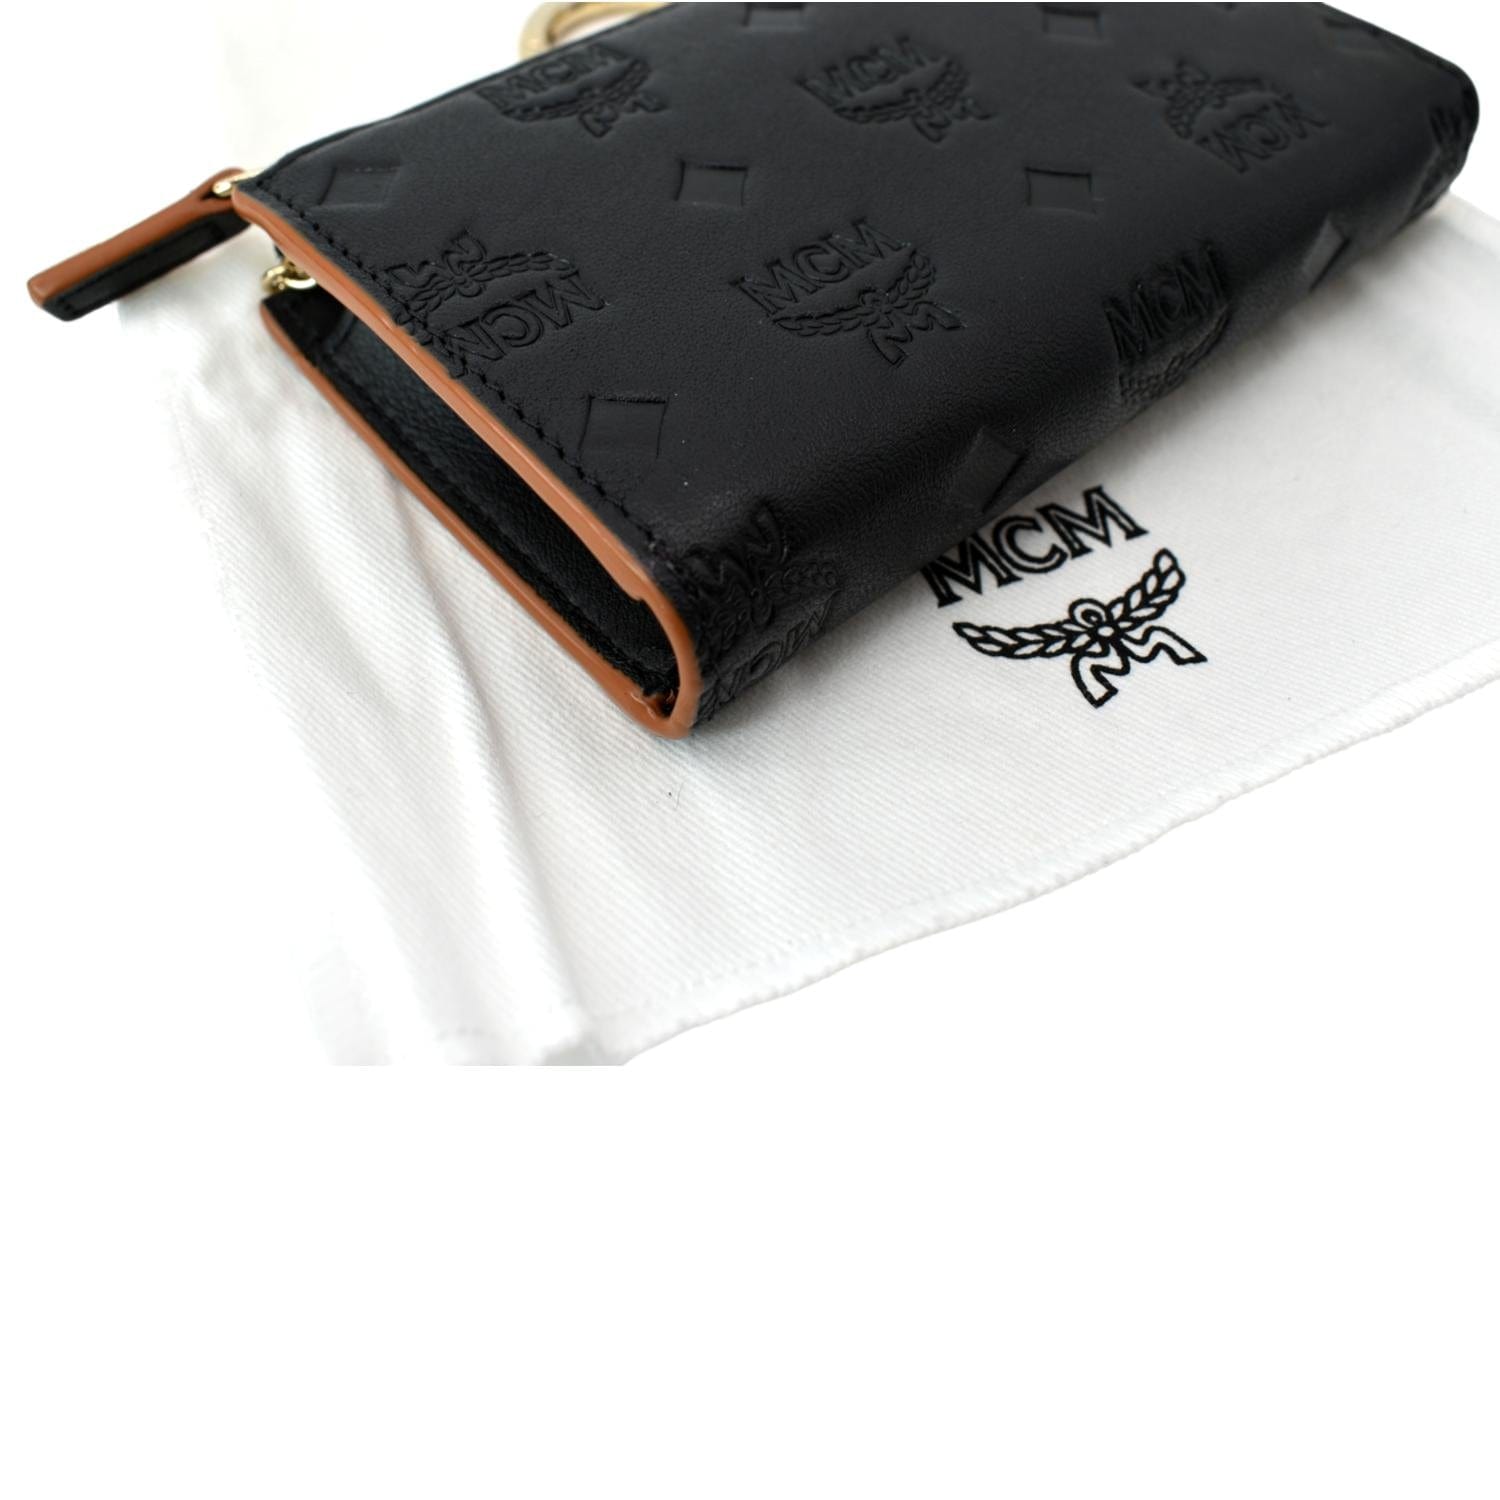 Mcm Mini Milla Zipped Card Wallet In Park Avenue Leather In Black